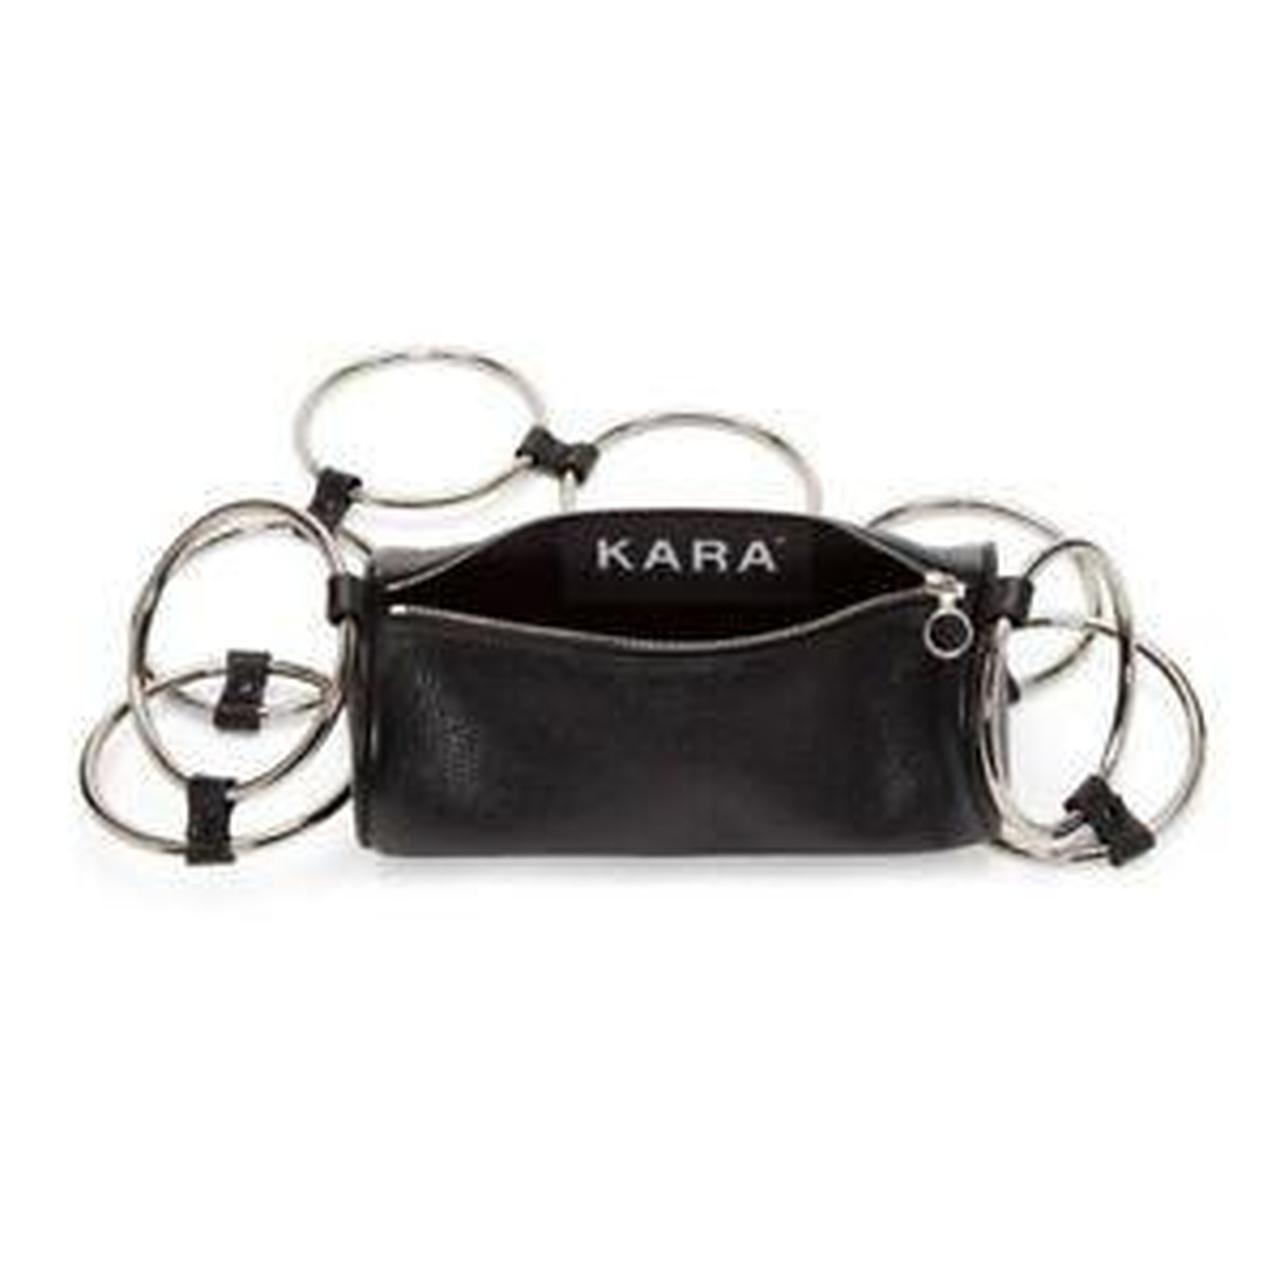 Kara Women's Black and Silver Bag (2)